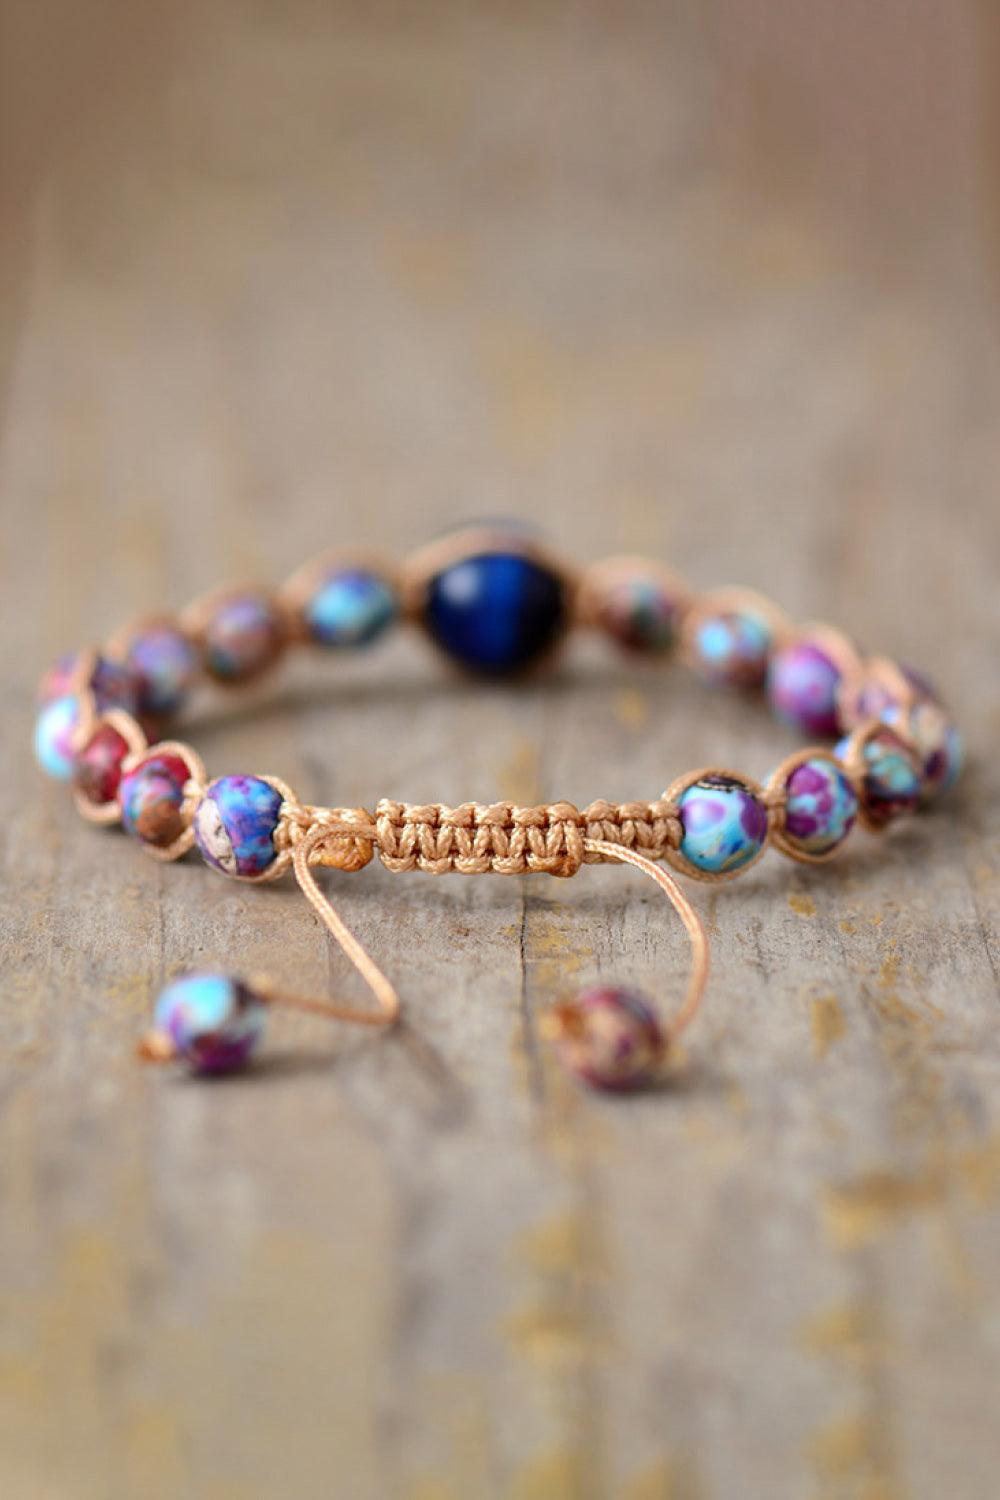 Imperial Jasper & Natural Stone Beaded Bracelet - Crazy Like a Daisy Boutique #